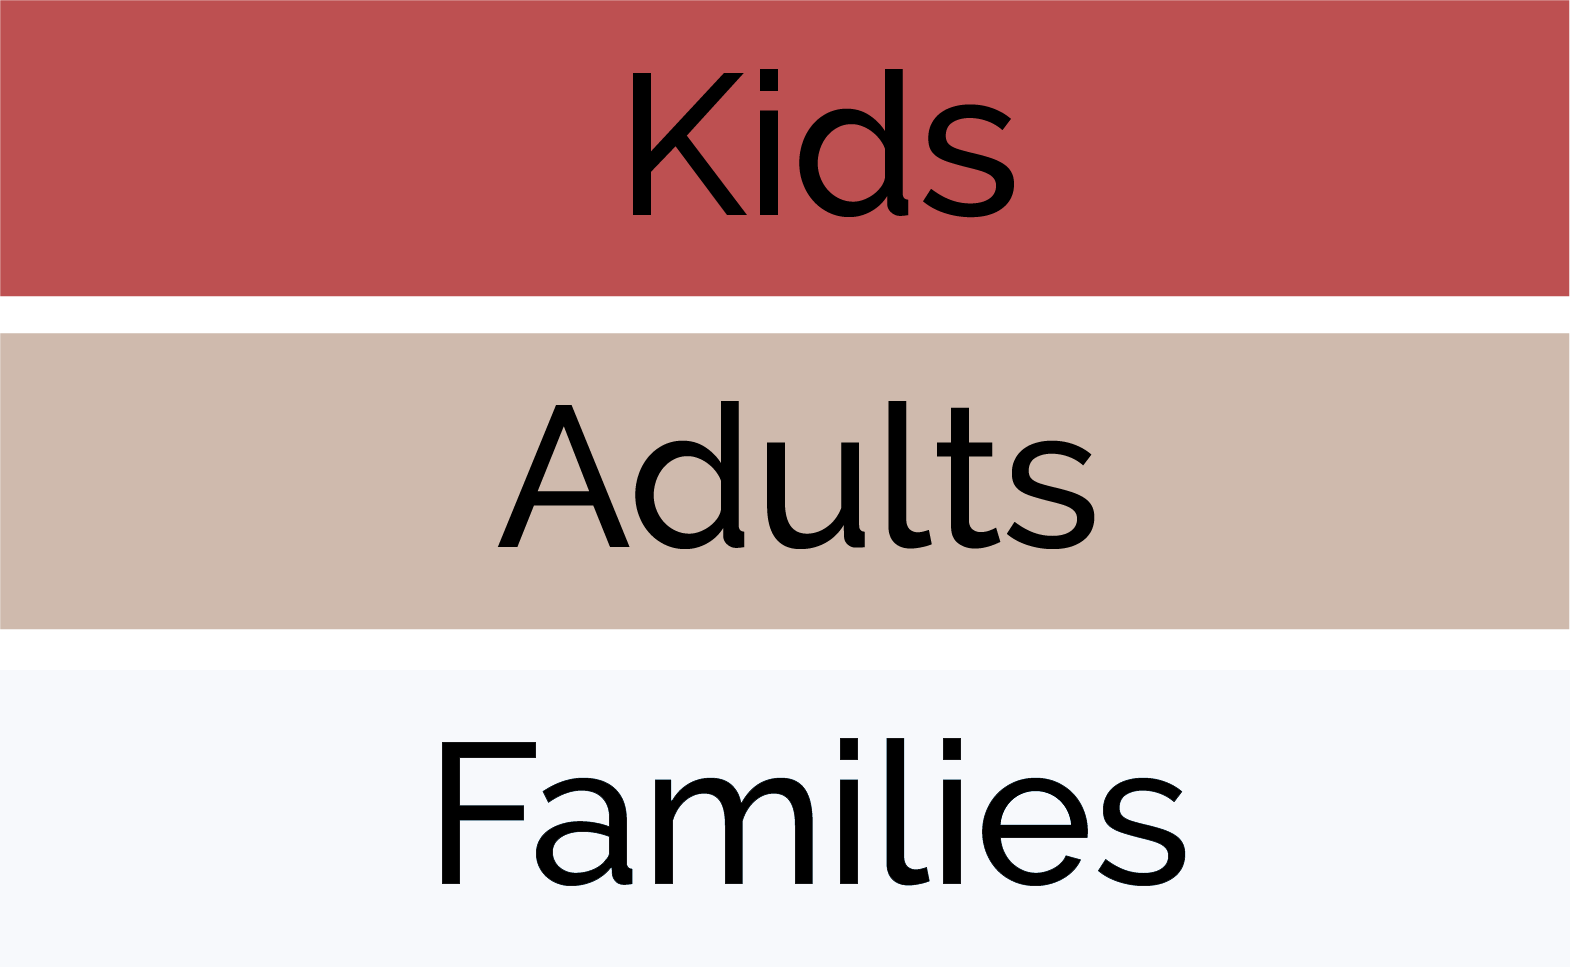 kids, families, adults